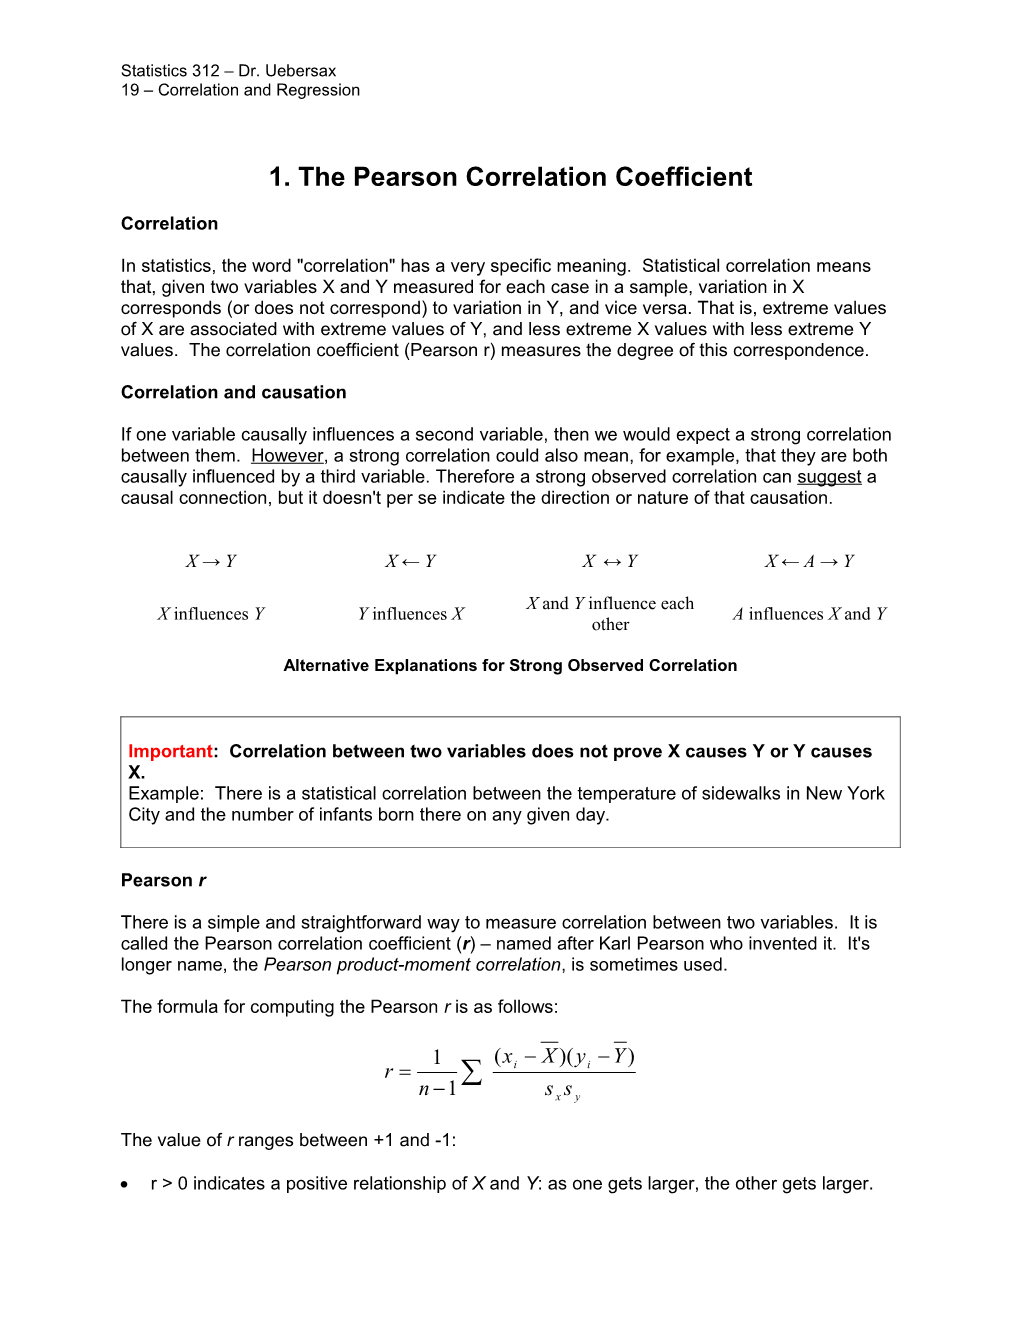 1. the Pearson Correlation Coefficient